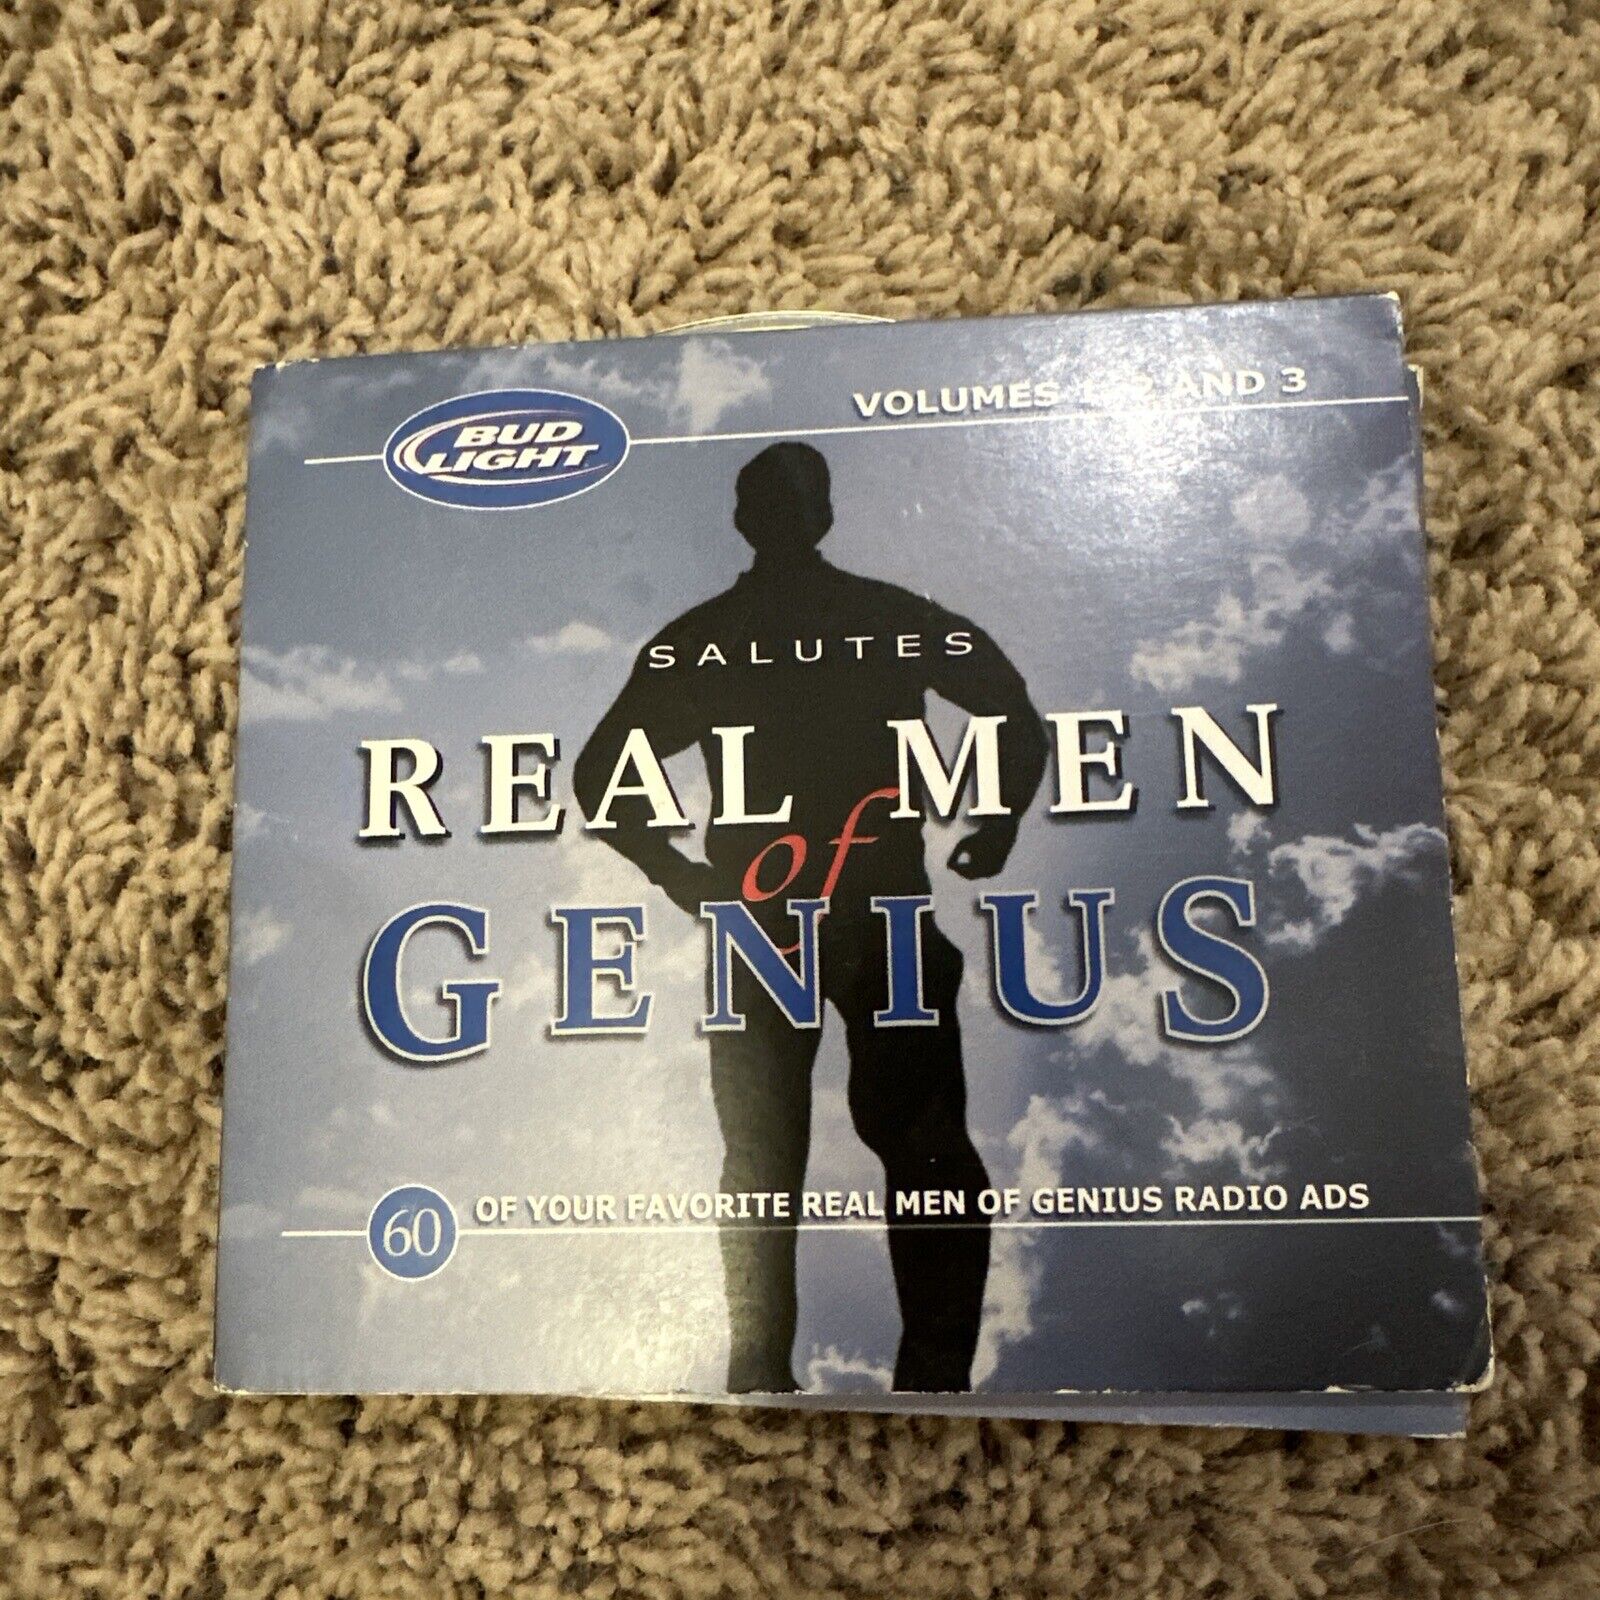 Bud Light Salutes Real Men Of Genius Volumes 1 2 And 3 CD Set Radio Ads 2005